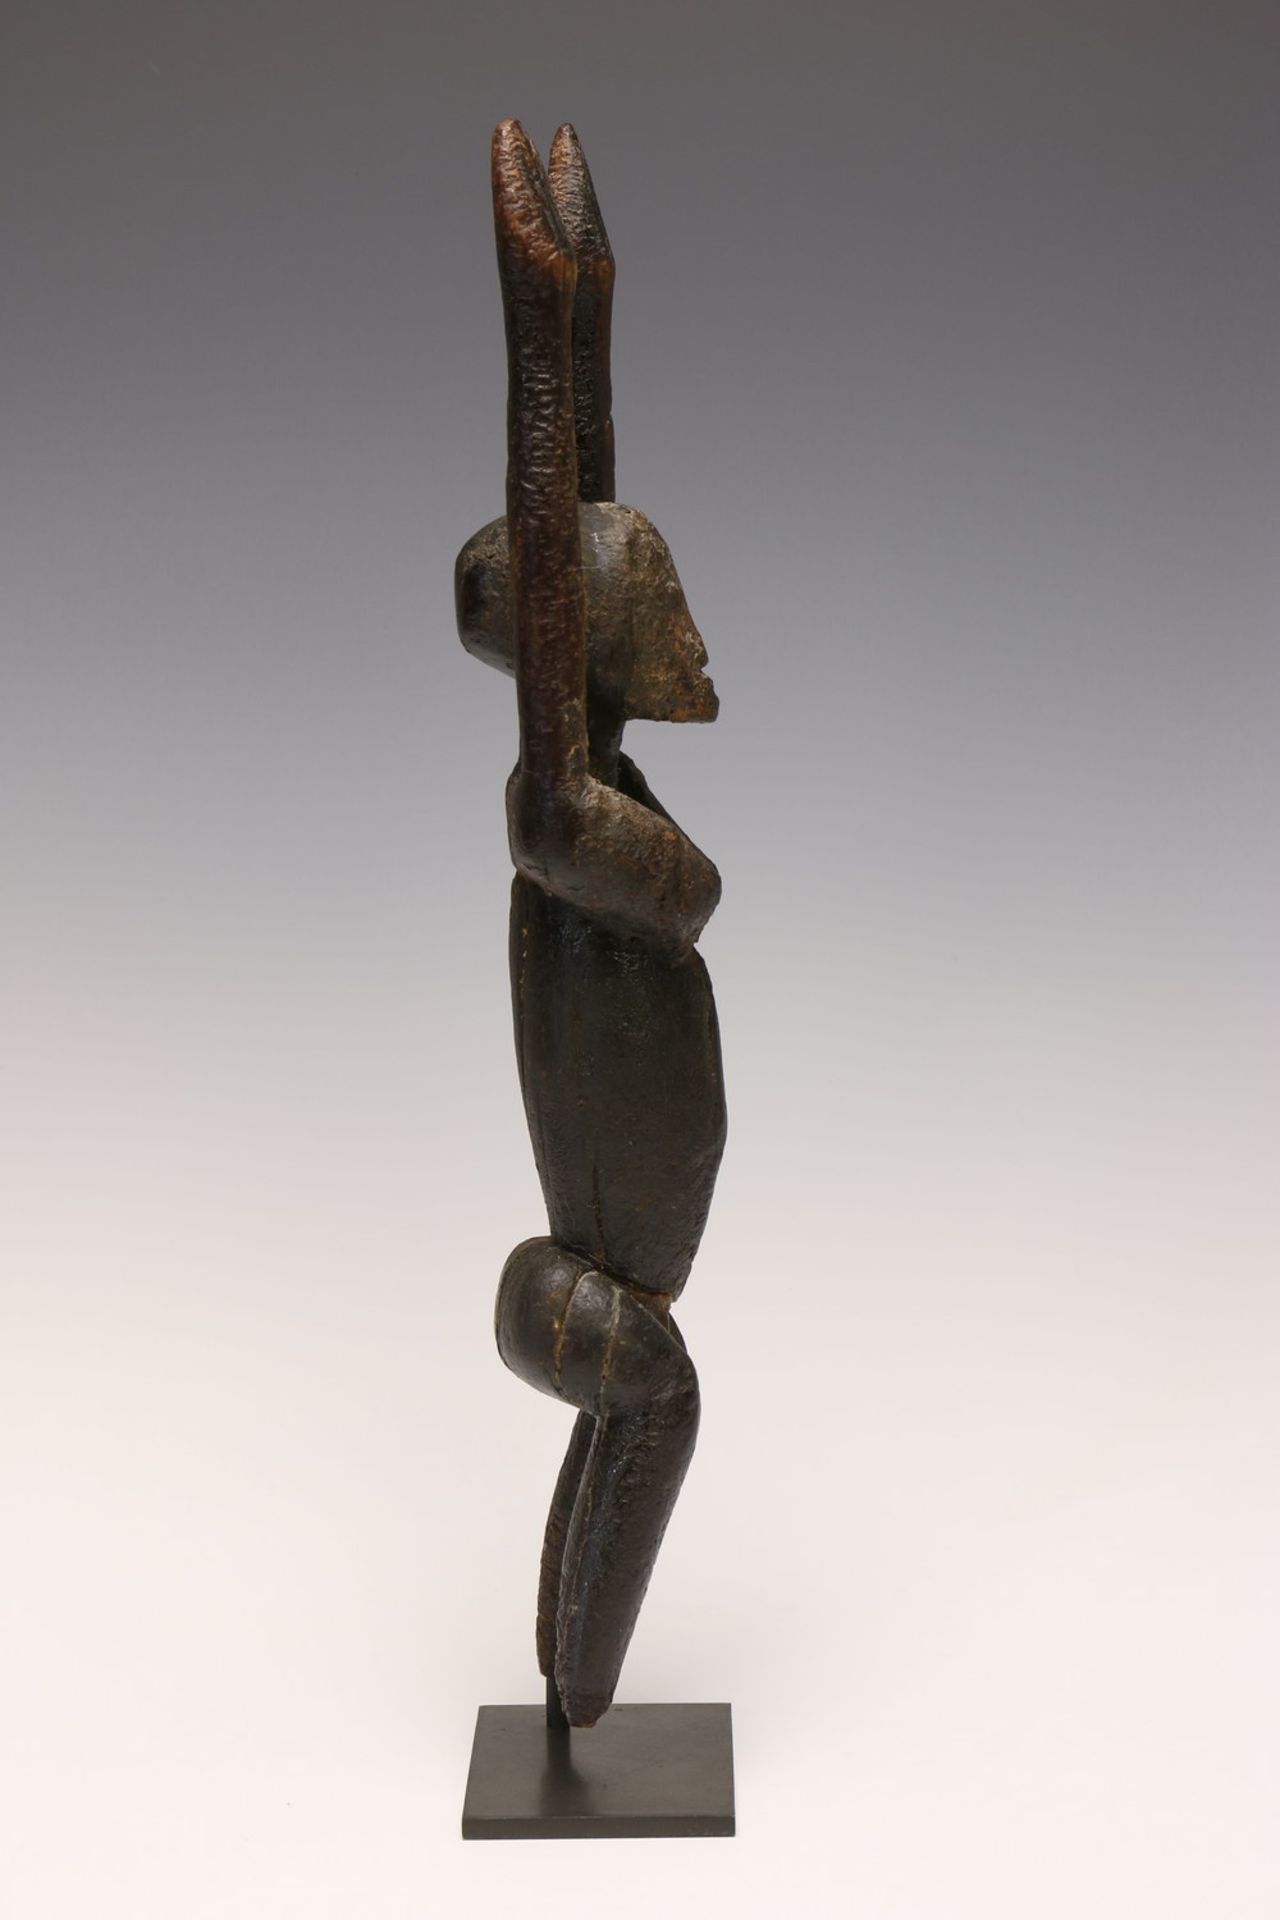 Dogon, standing antropomorphic figure,with raised arms and dark oily patina. Provenance, Steven de - Bild 3 aus 6